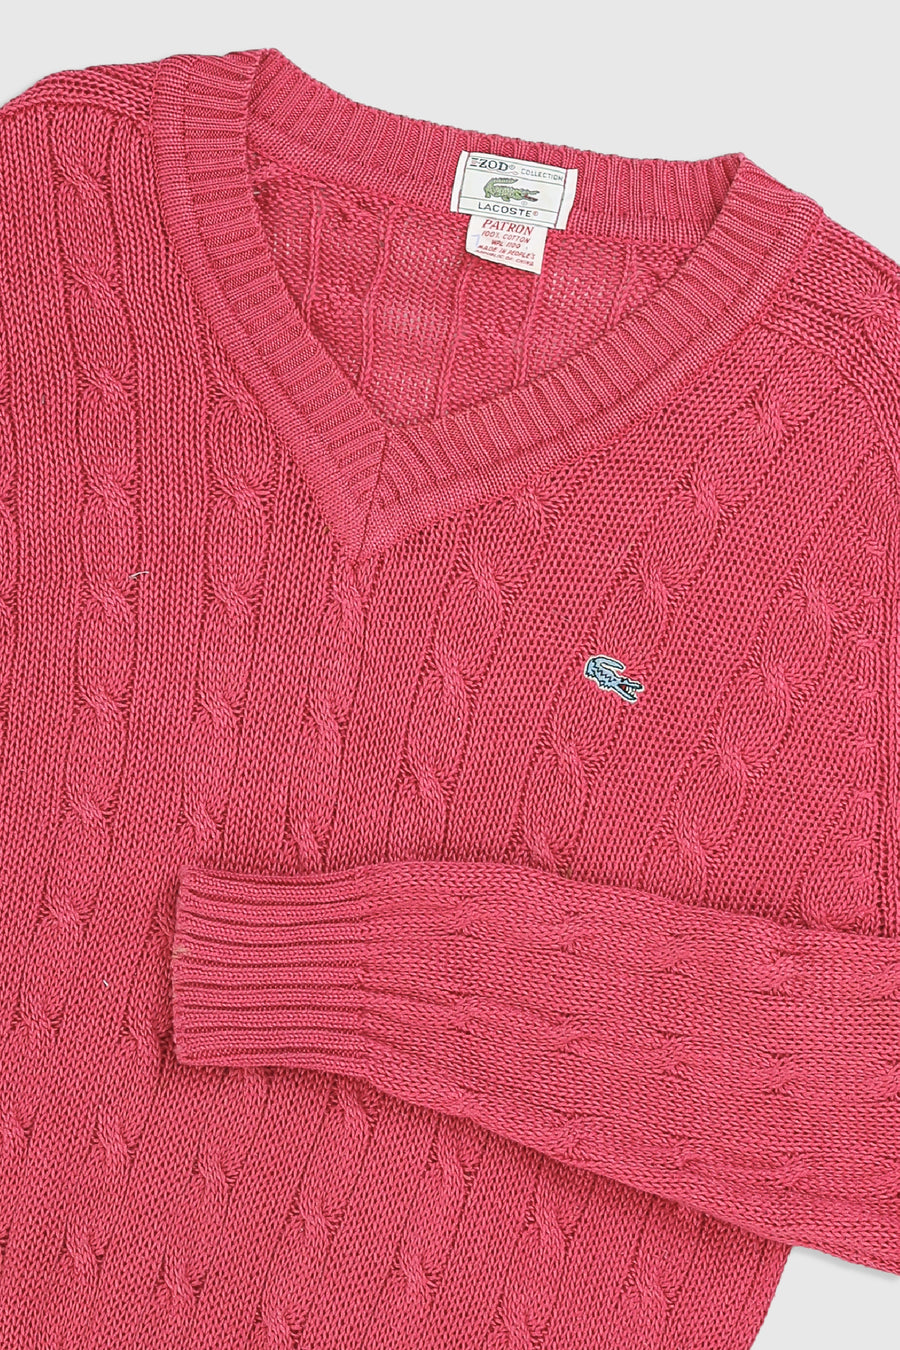 Vintage Lacoste Knit Sweater